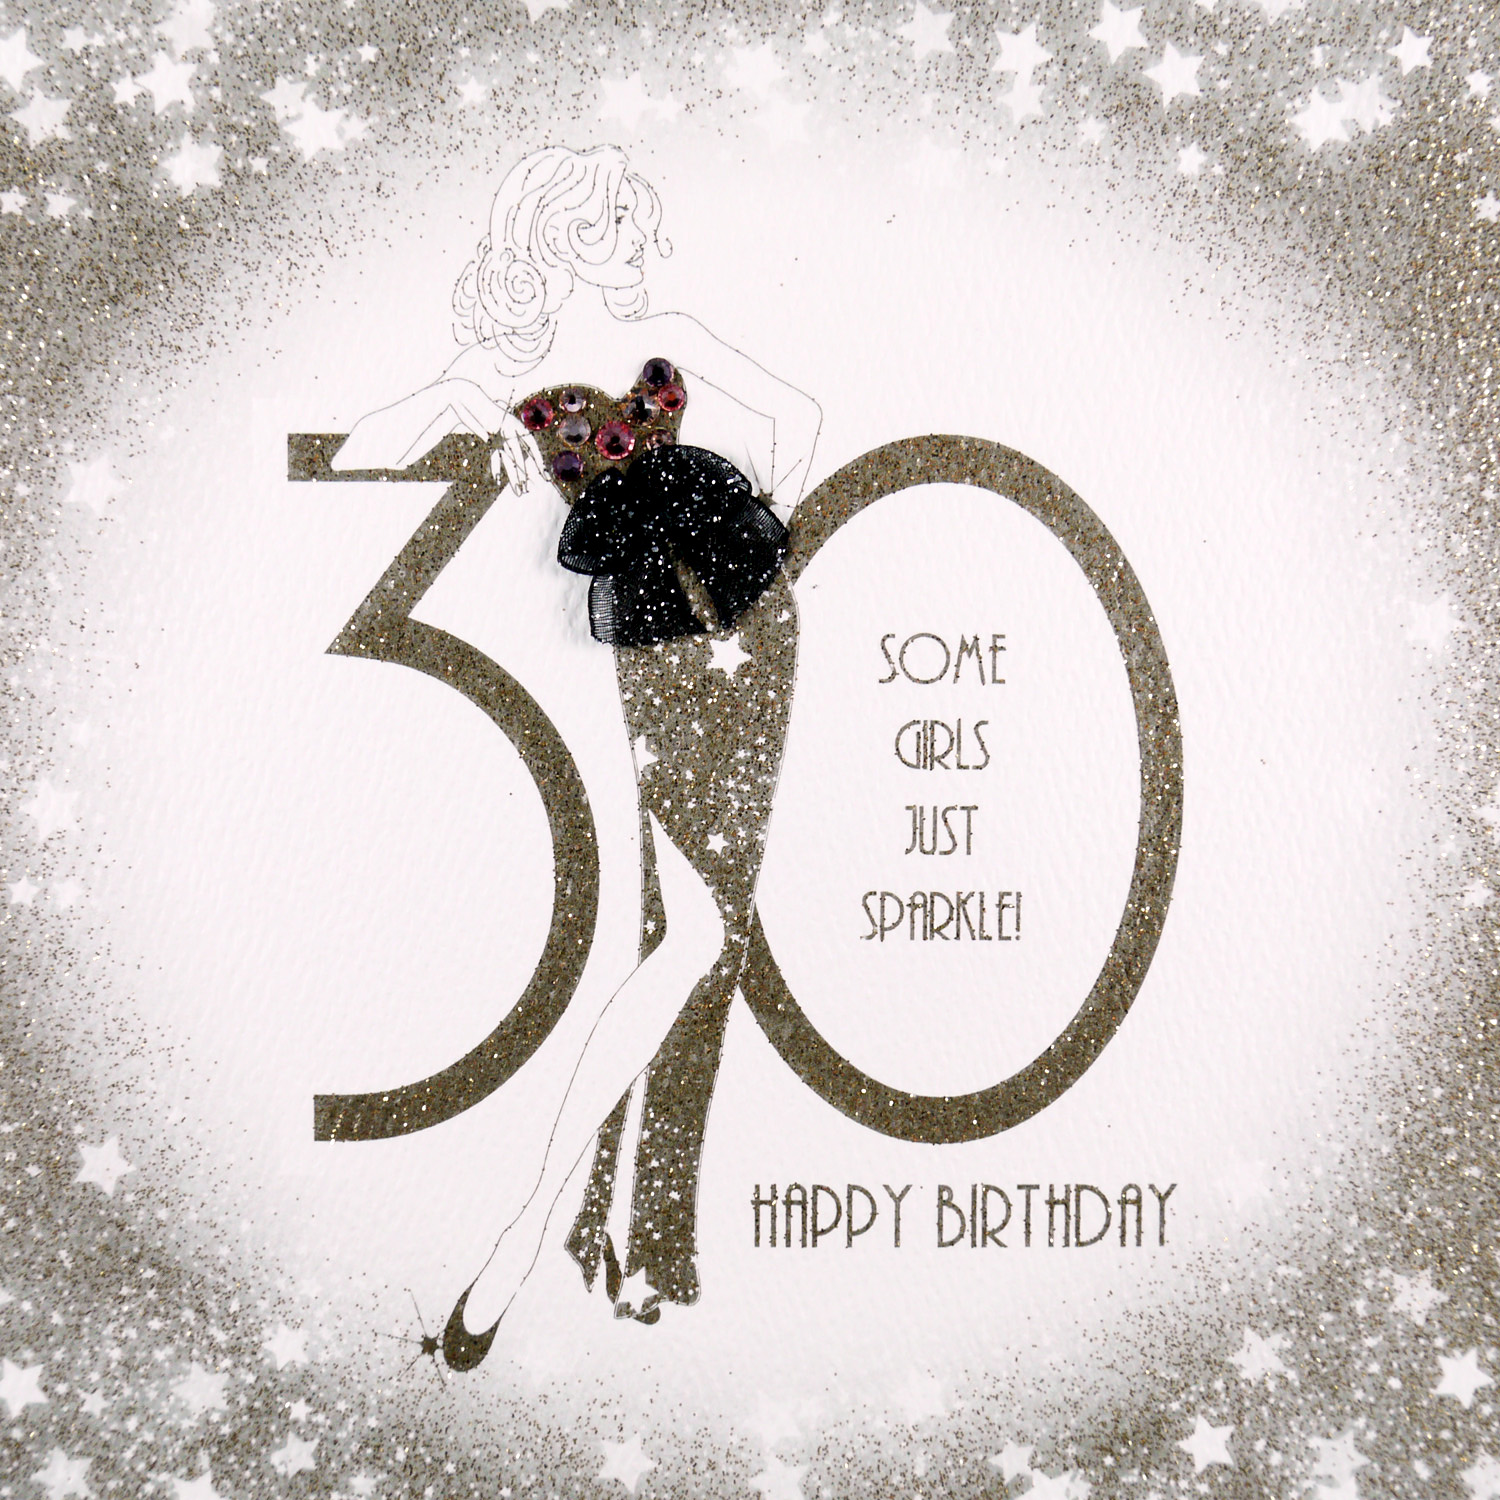 Some Girls Just Sparkle - Handmade 30th Birthday Card - GS18 - Tilt Art